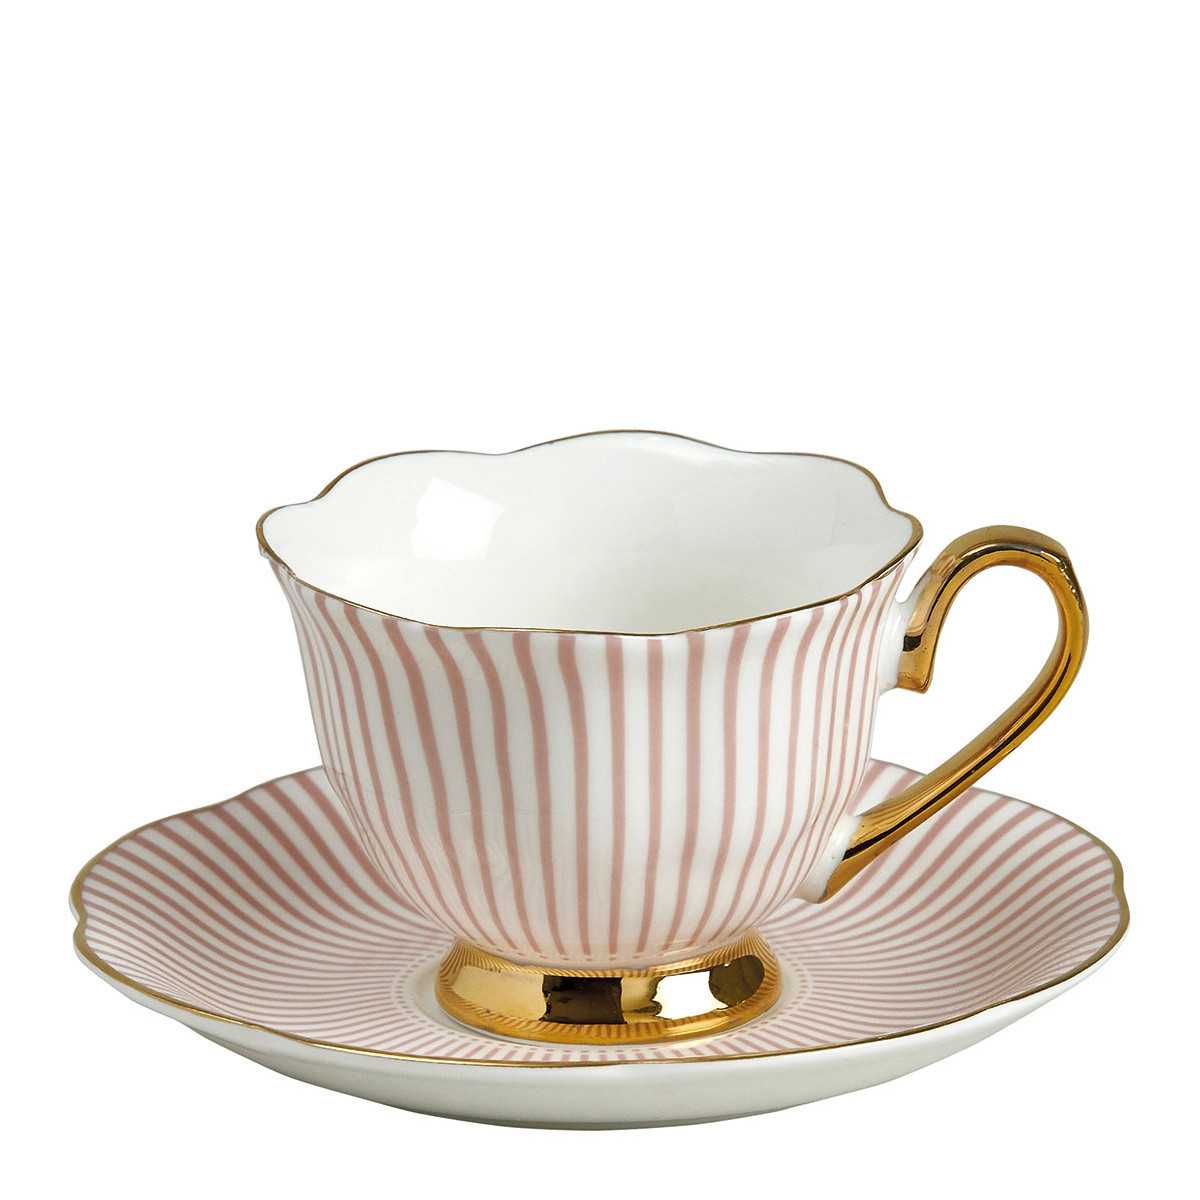 INTERIEUR- DECORATION|Madame de Récamier 4 Kaffeetassen-Set - PinkMATHILDE MTassen und Teekannen